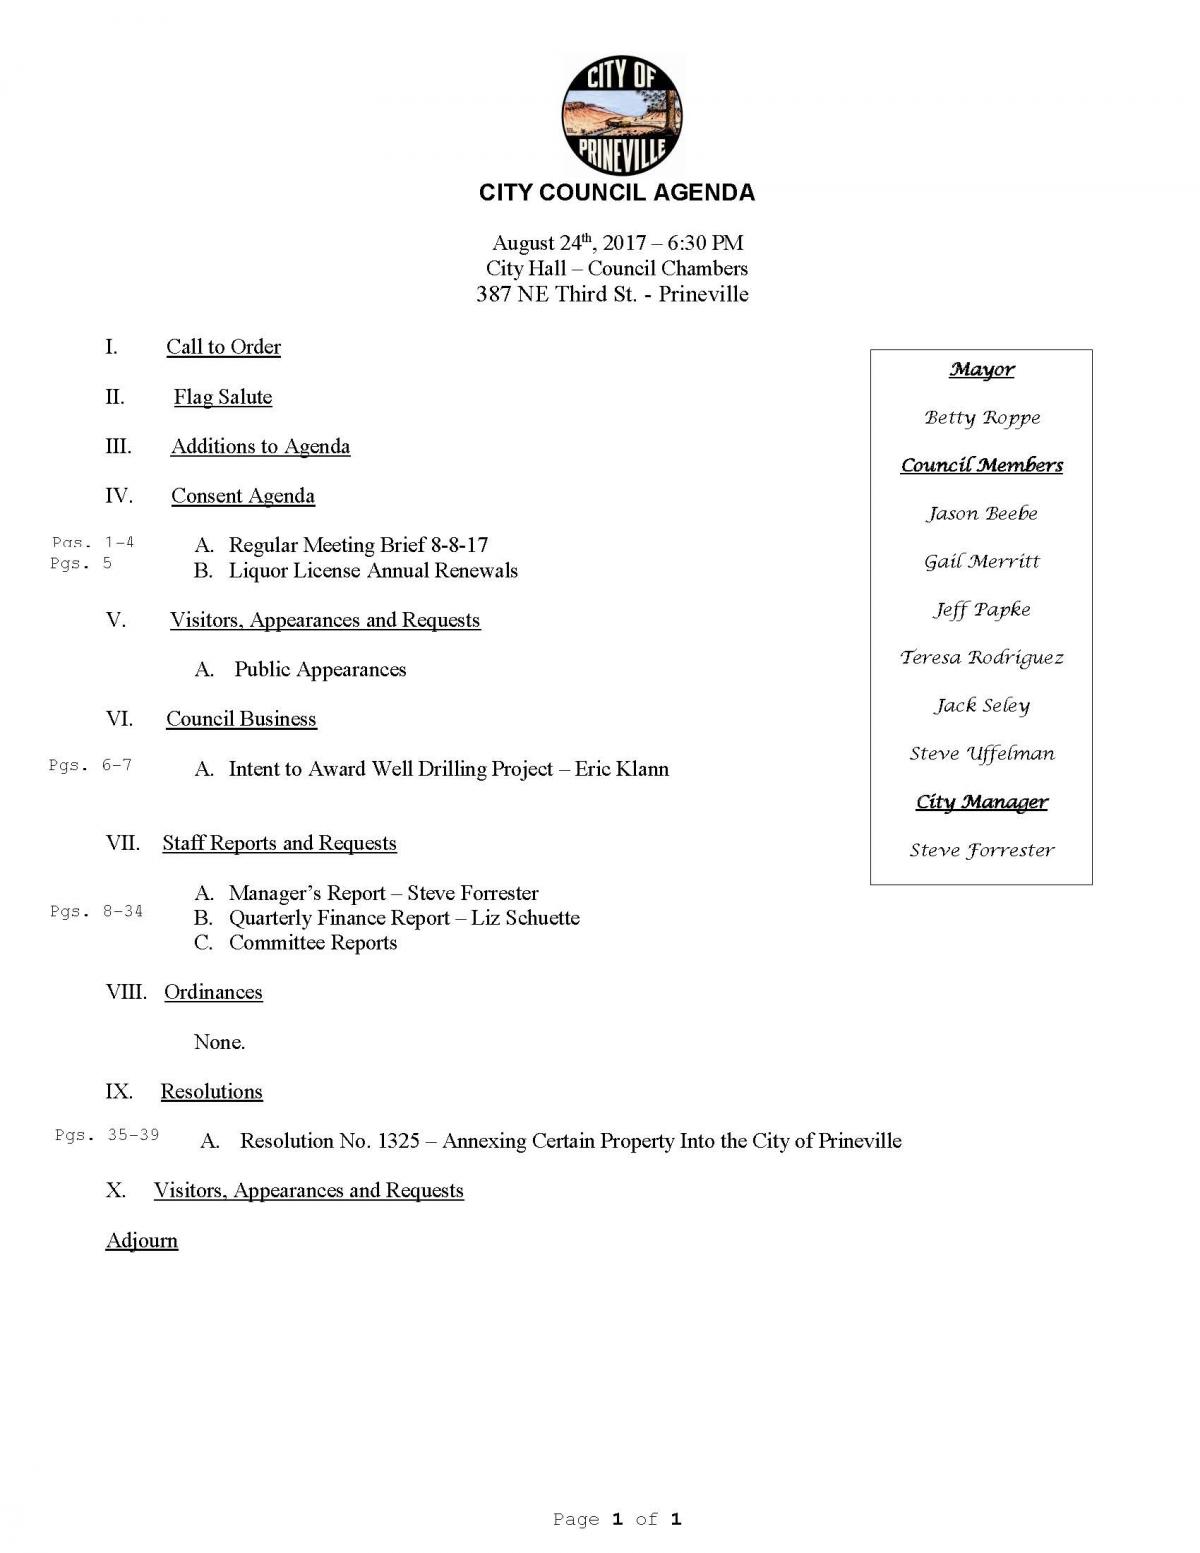 Council Agenda 8-24-17